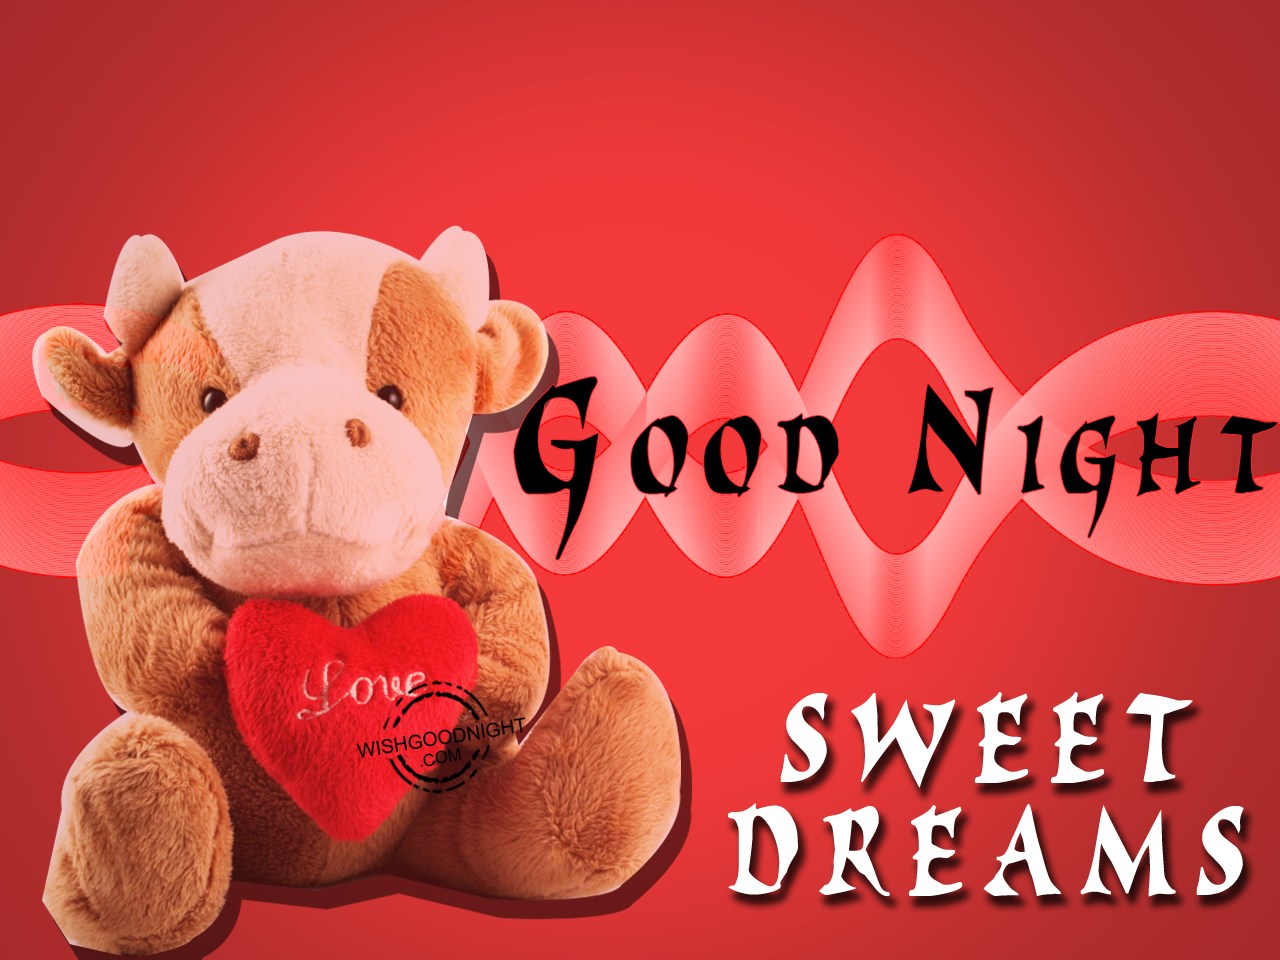 Good Night Wishes - Good Night Pictures – WishGoodNight.com